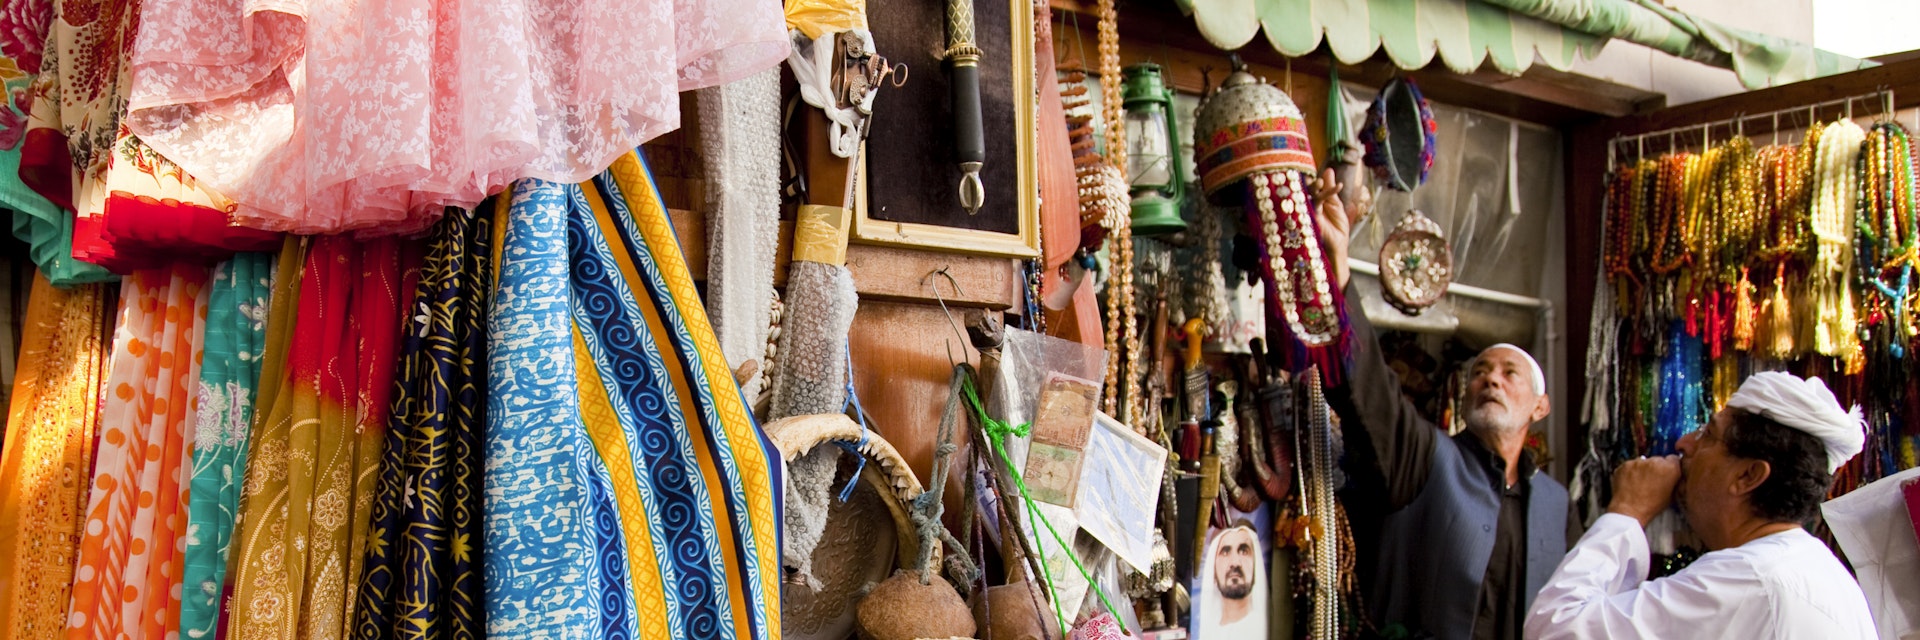 Tourist shopping for souvenirs at Bur Dubai Souq.